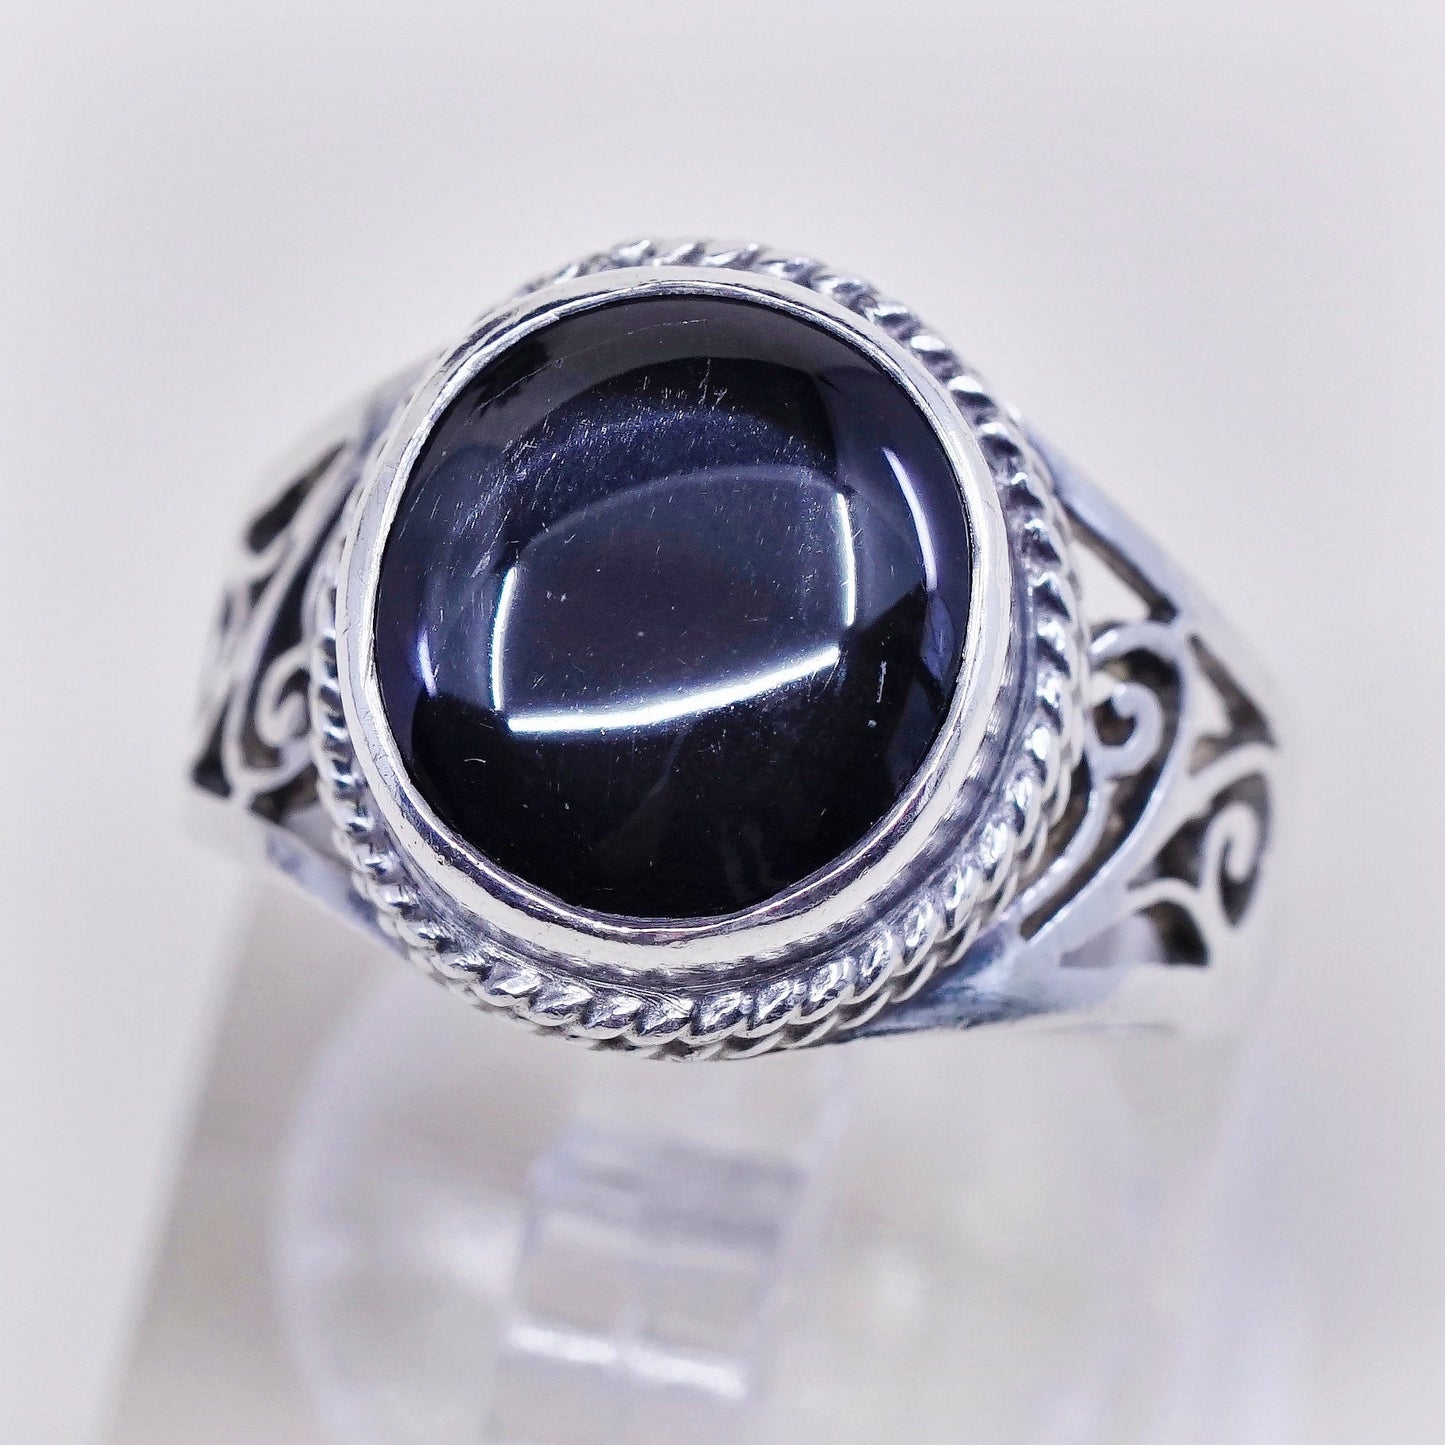 sz 7, vtg sterling silver ring, handmade filigree 925 ring w/ black tiger eye